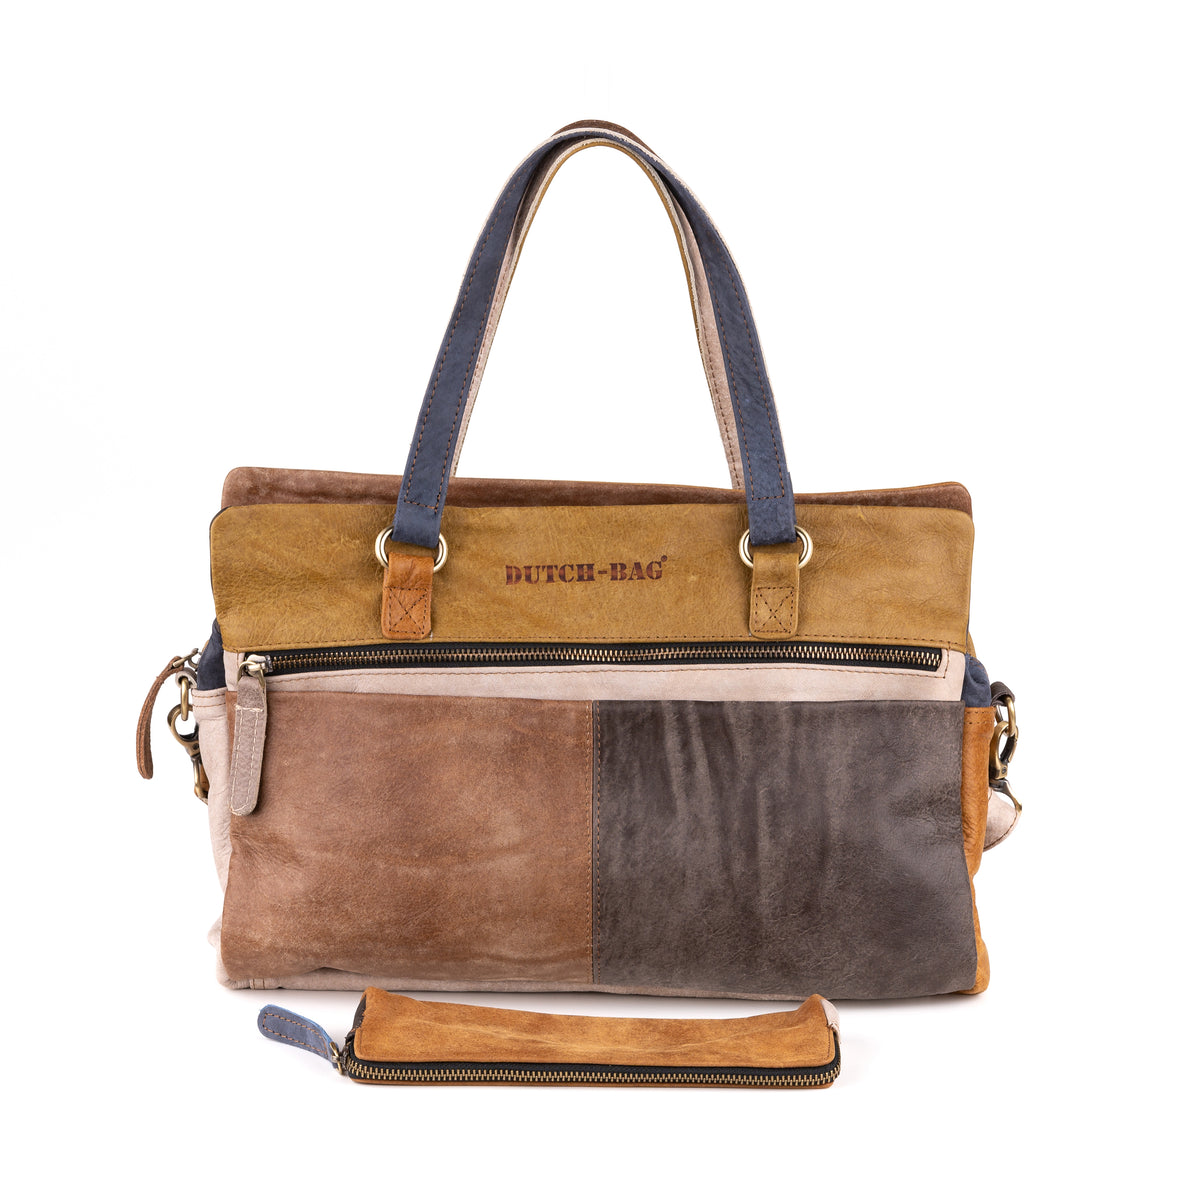 Arnhem Ladies Handbag Leather Patchwork - Kenya Leather